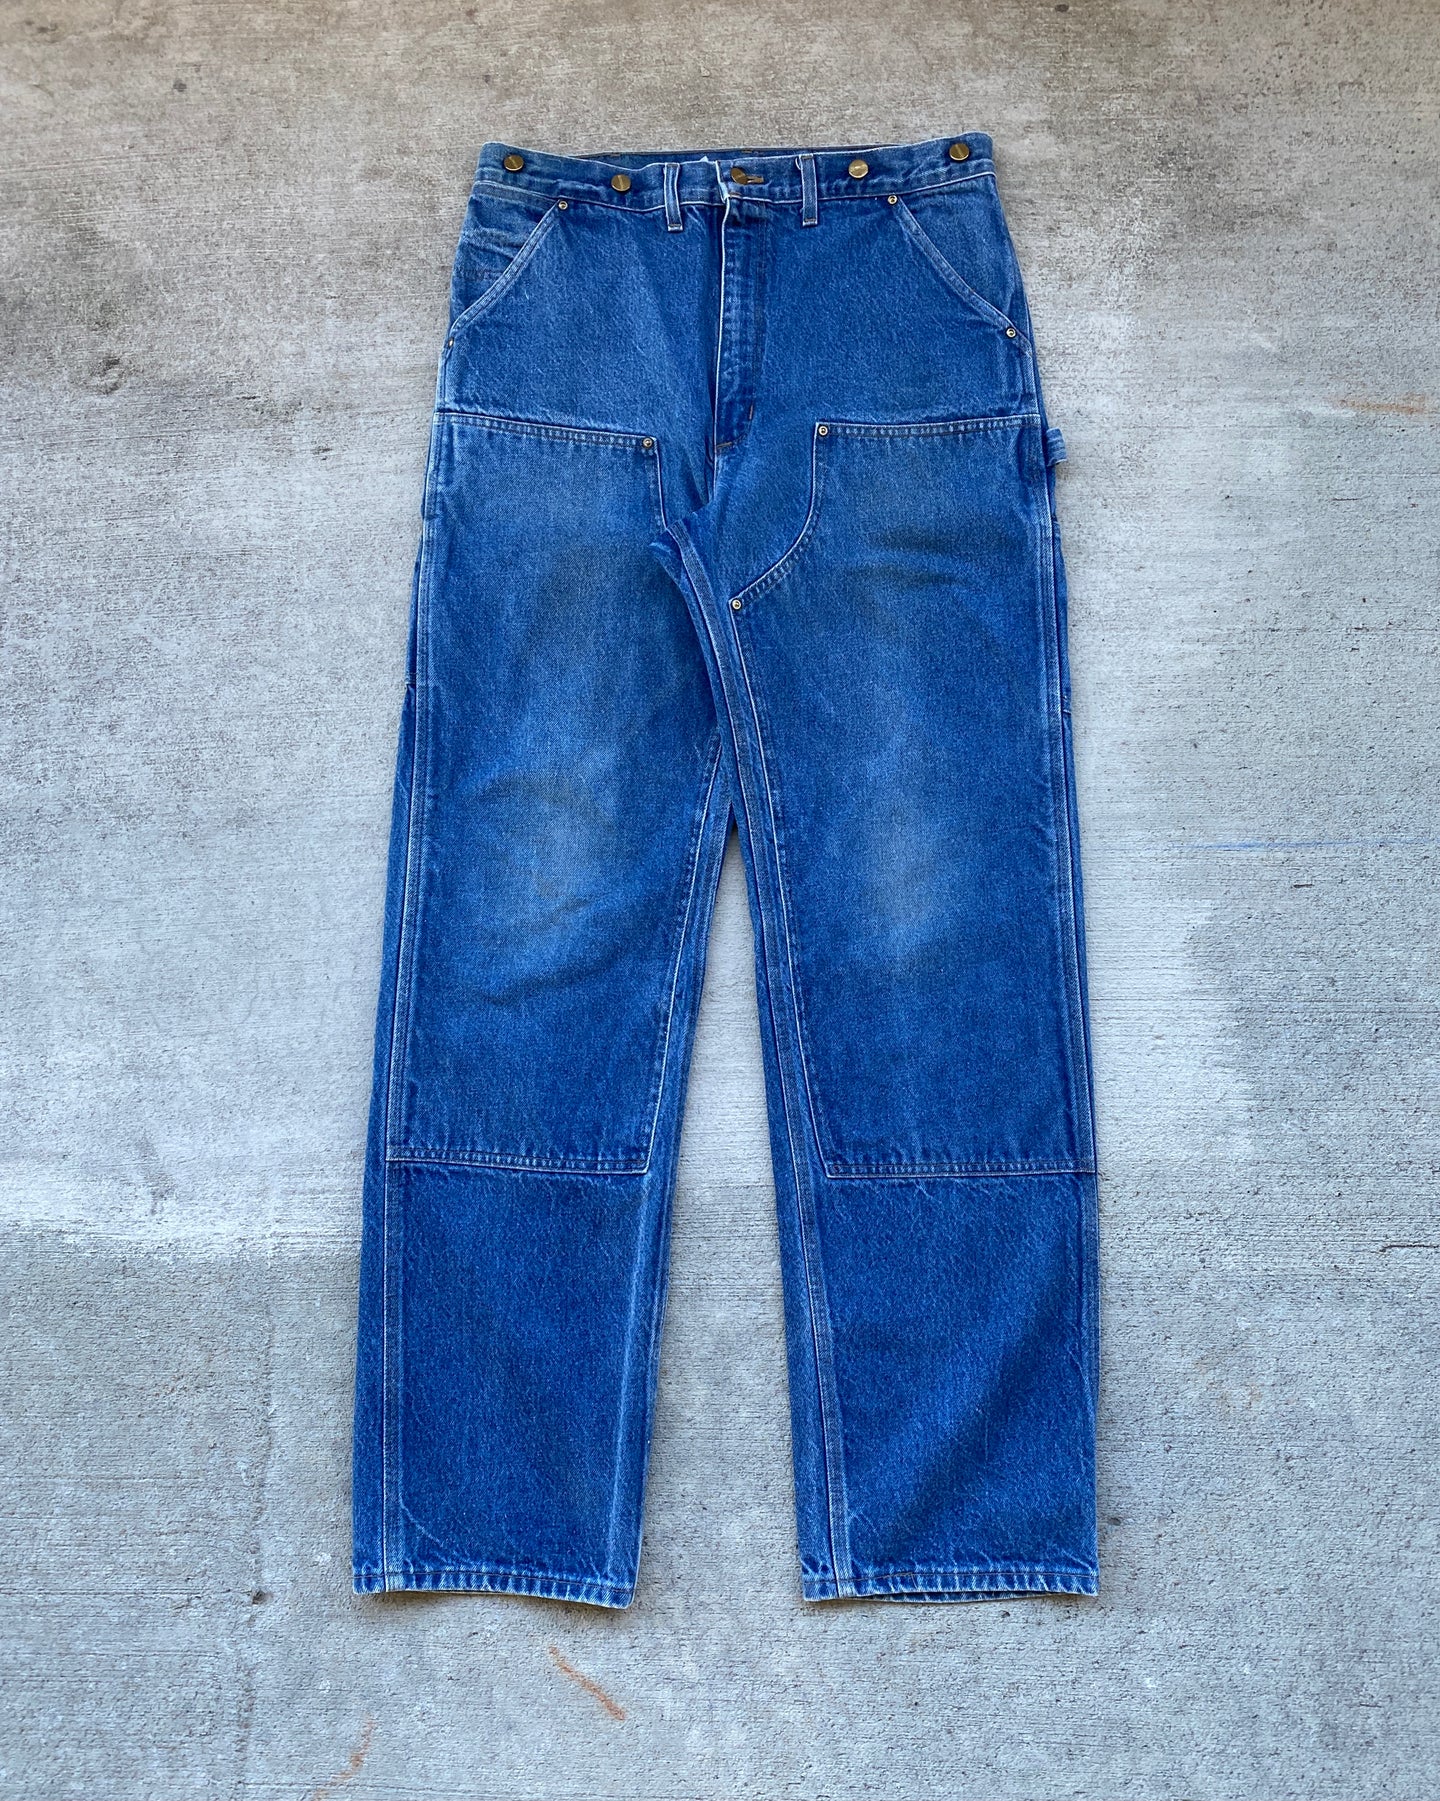 1990s Carhartt Indigo Wash Double Knee Denim Jeans - Size 34 x 34